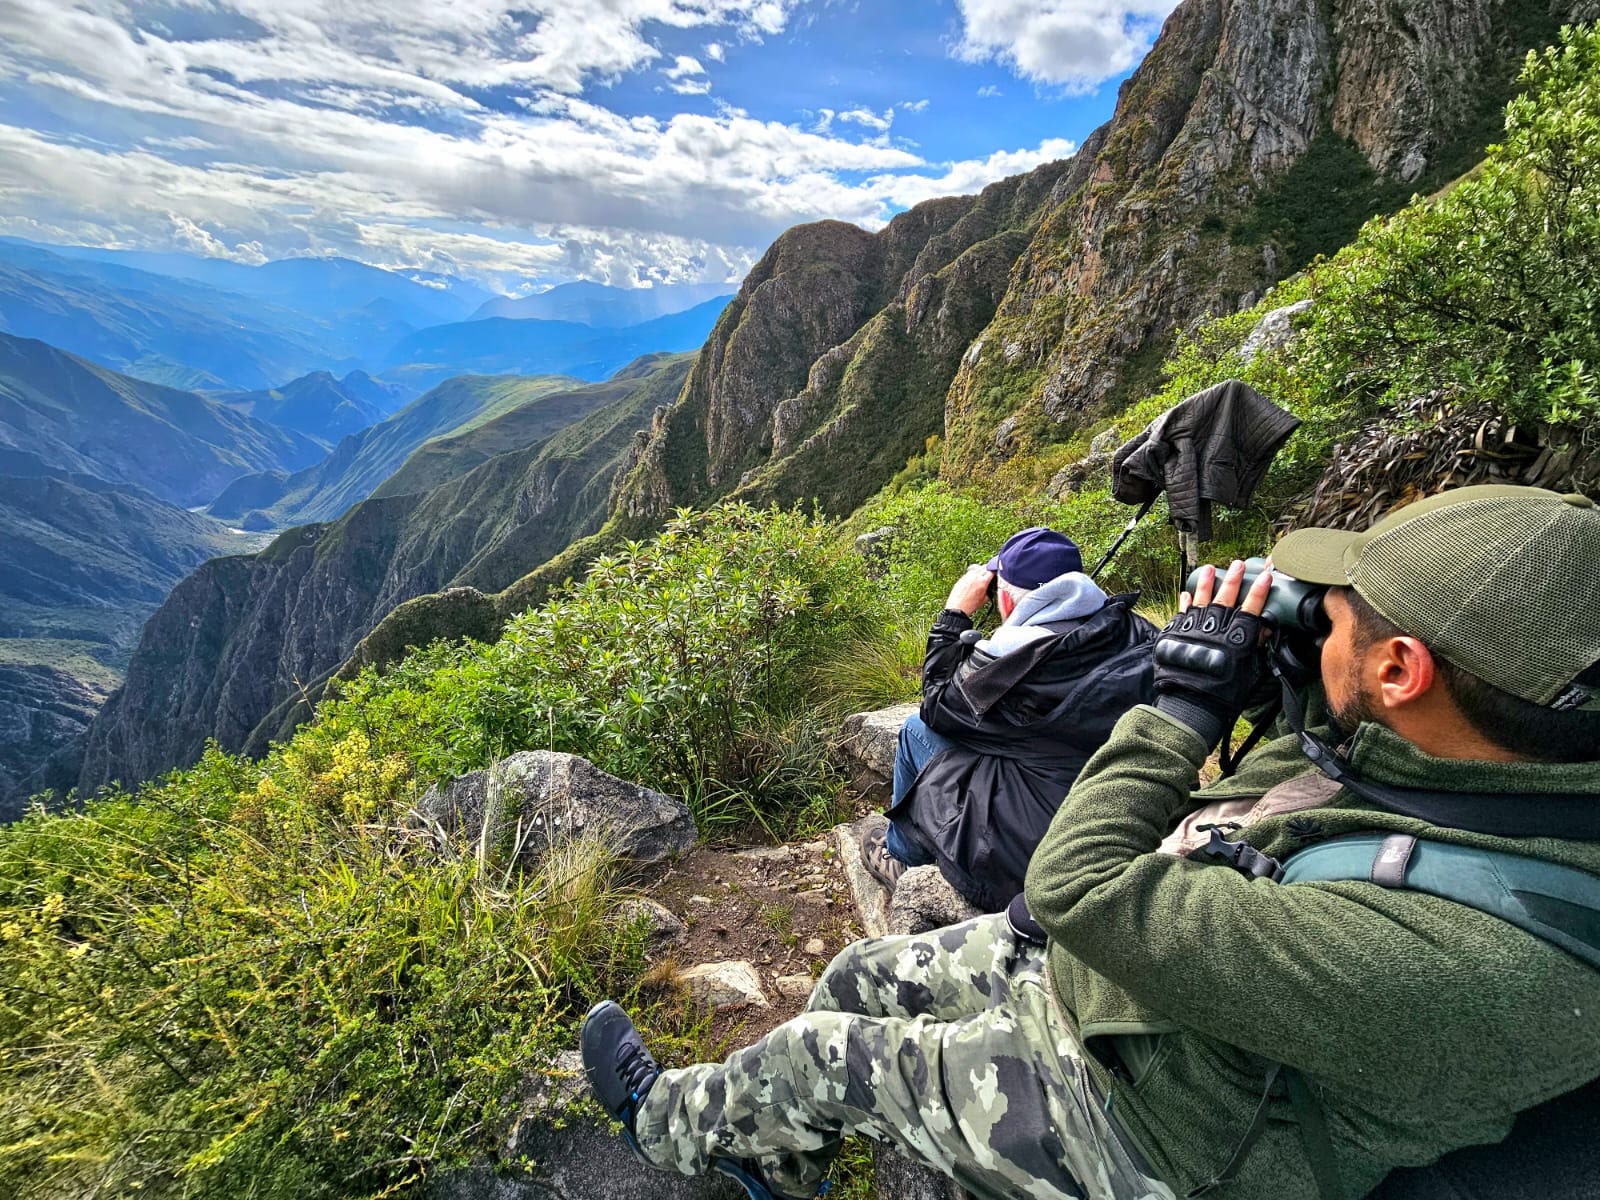 Bird watching tours in Cusco - book with Fertur Peru Travel